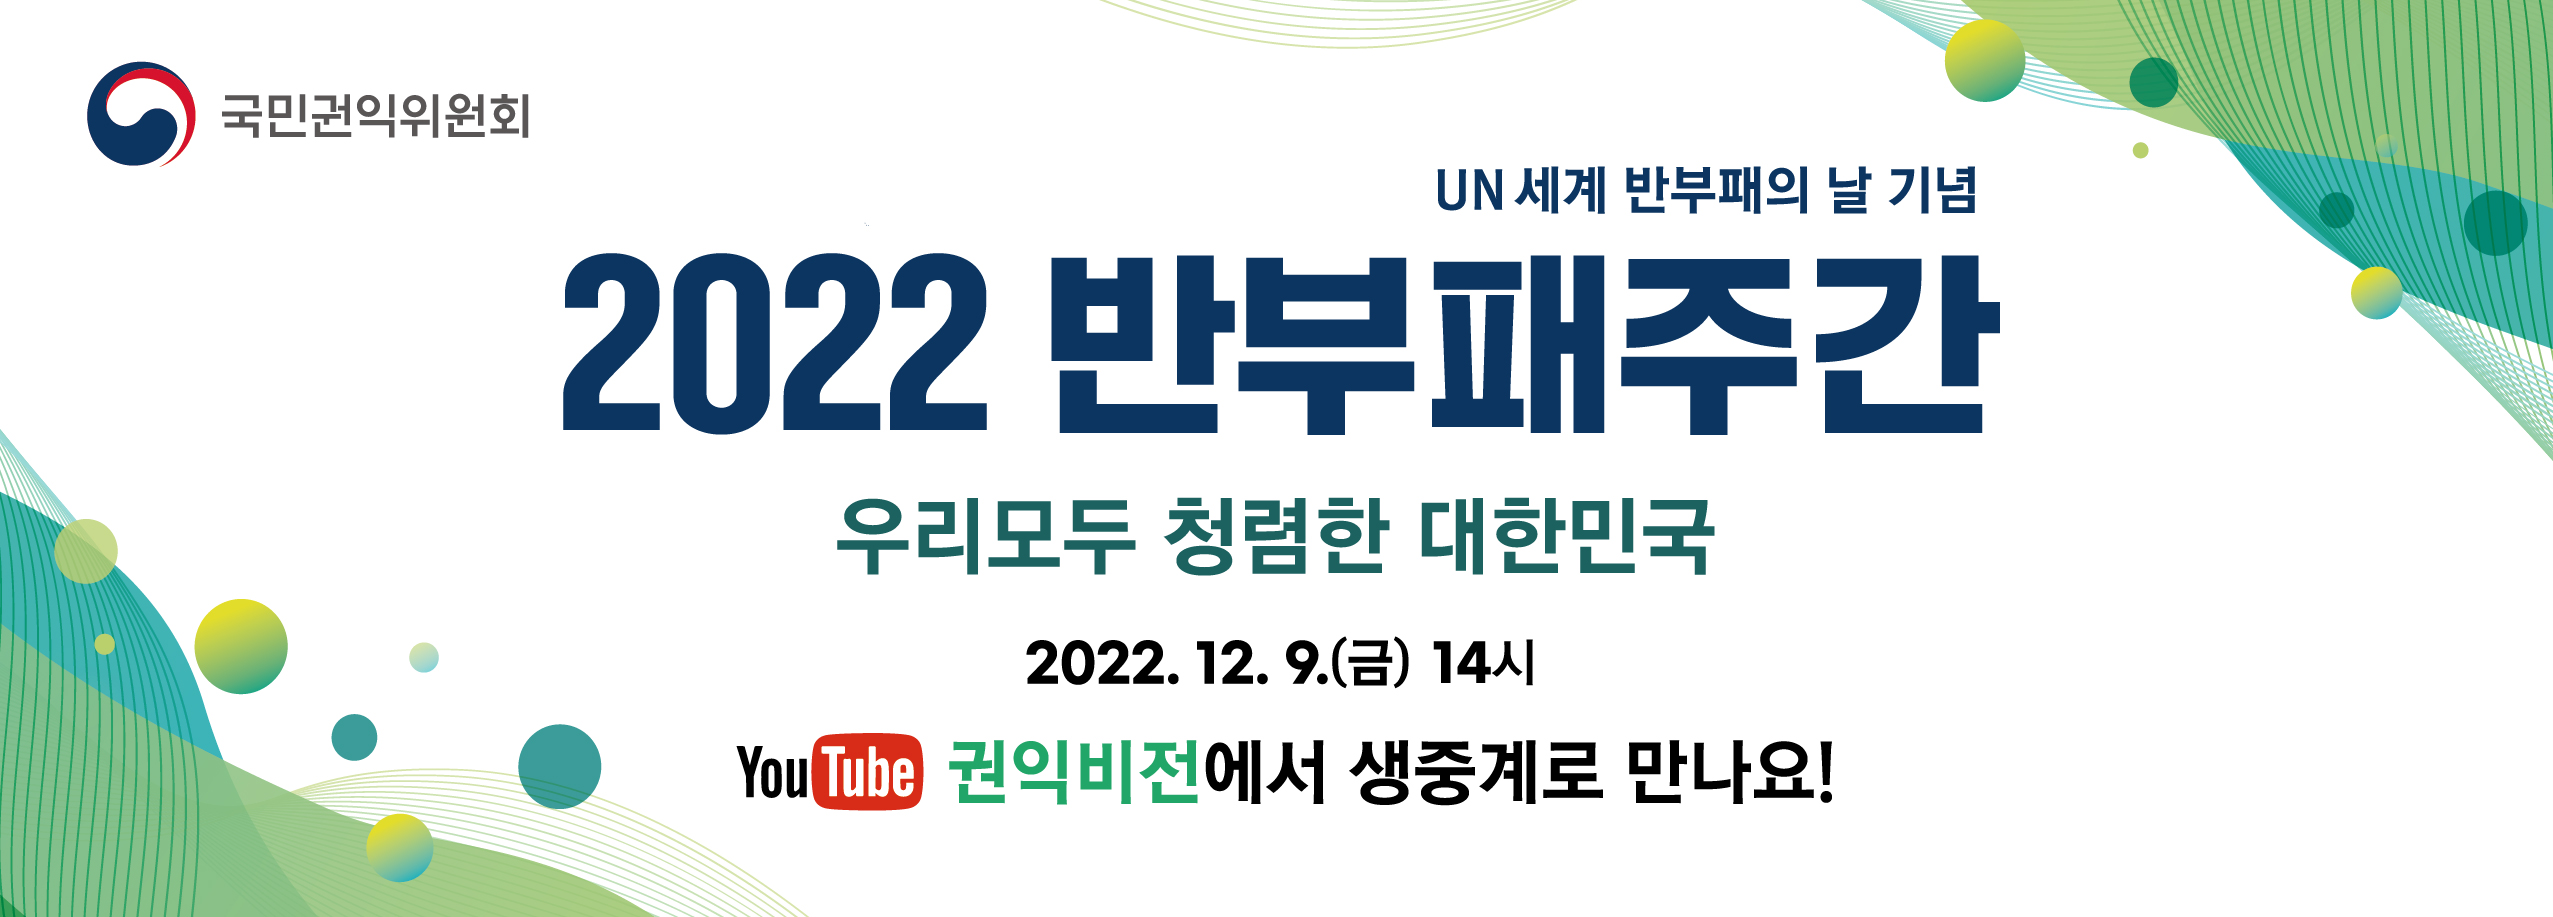 UN세계 반부패의 날 기념
2022년 반부패 주간 우리모두 청렴한 대한민국
2022.12.9.(금) 14시
유튜브 권익비전에서 생중계로 만나요!